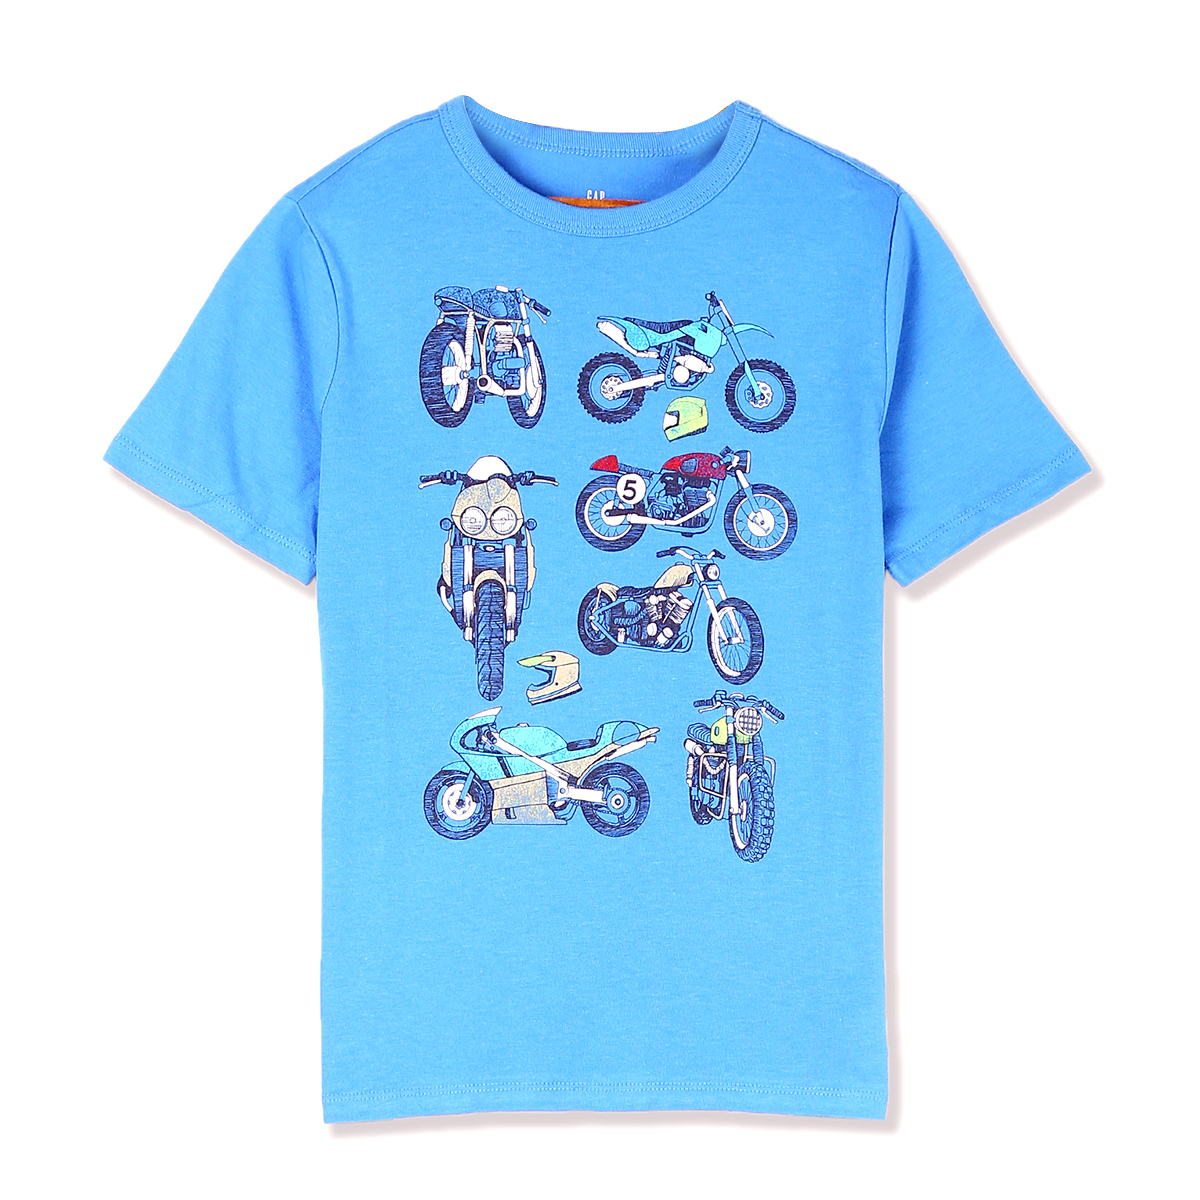 Gap Kids Boys T-Shirt,Blue